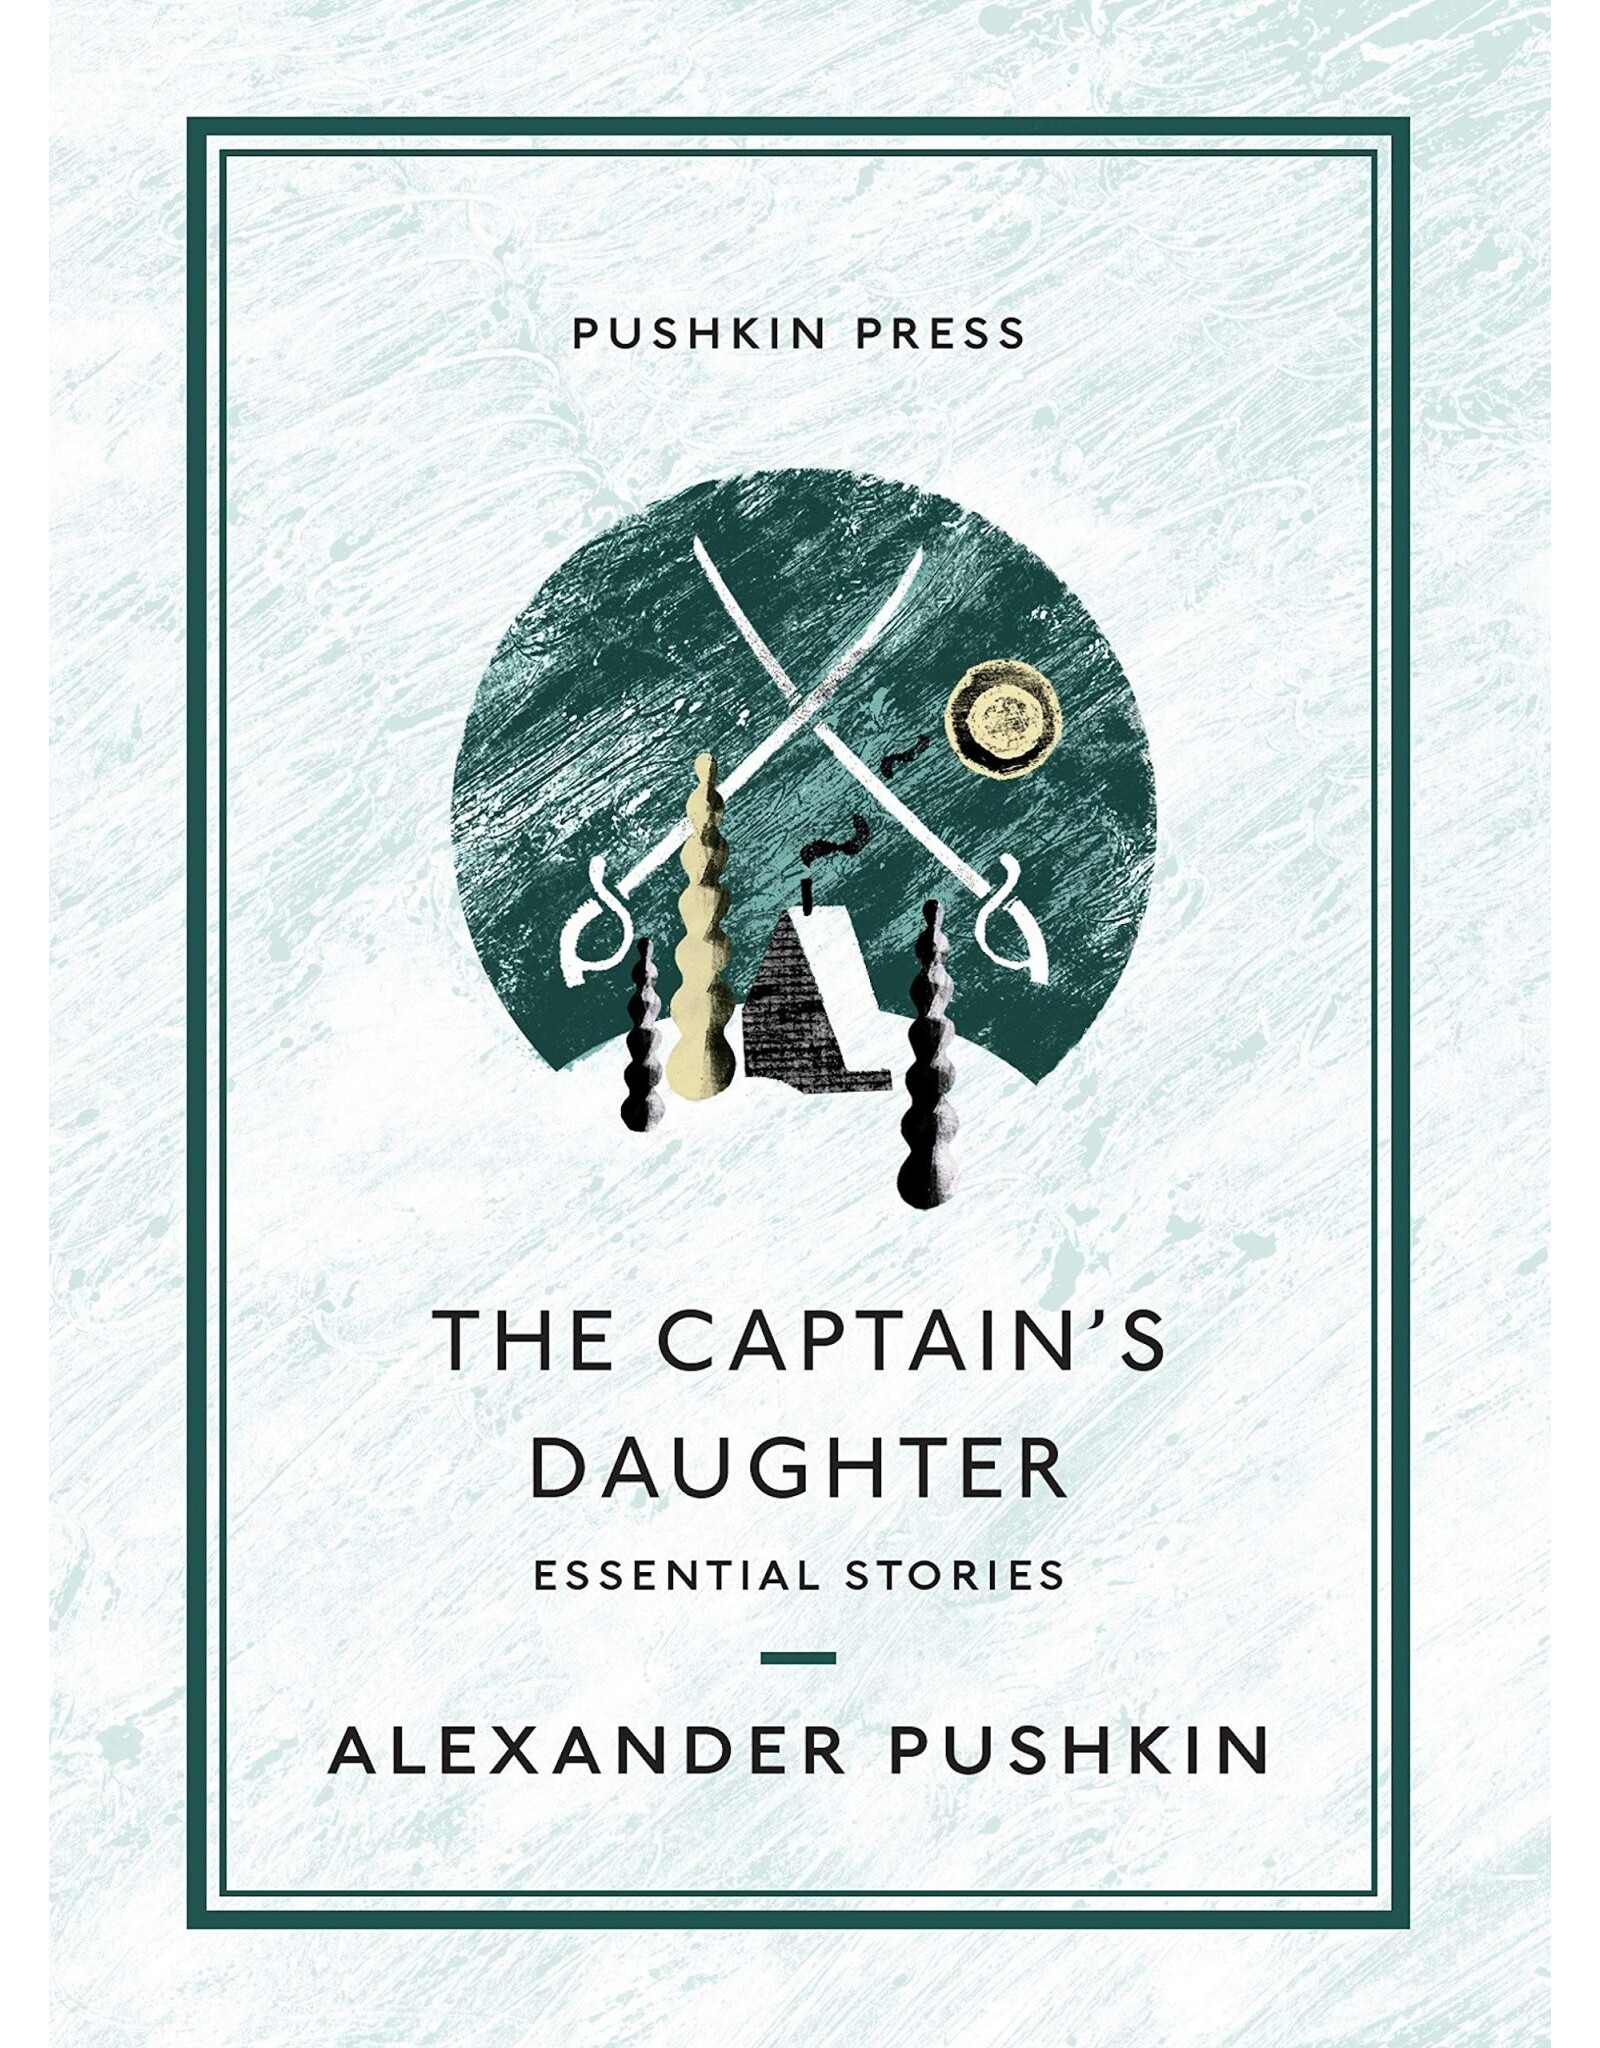 The Captain's Daughter: Alexander Pushkin Essential Stories